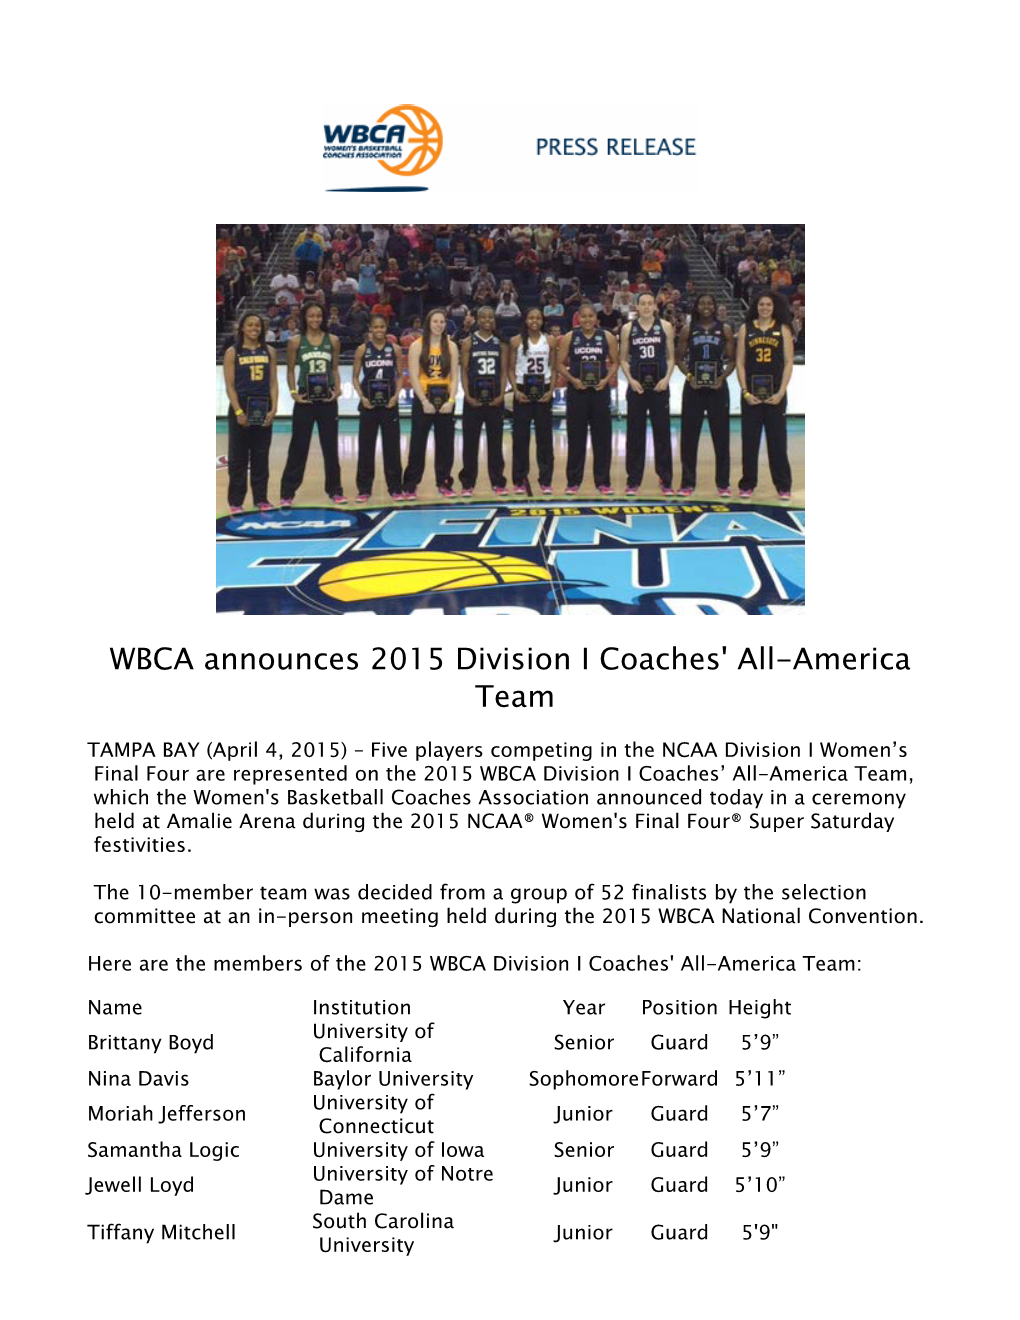 WBCA Announces 2015 Division I Coaches' All-America Team 2014